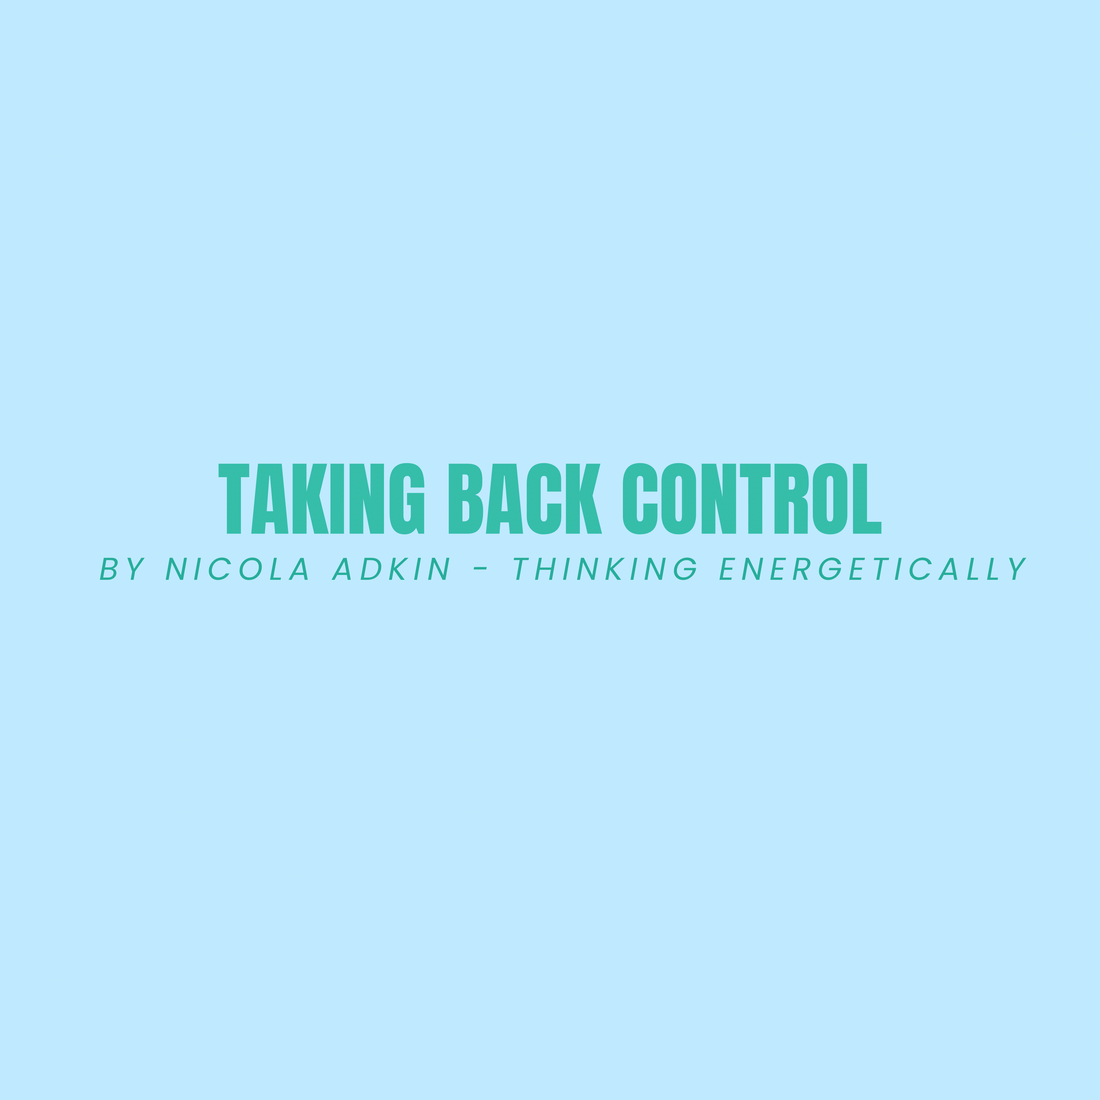 Taking Back Control by Nicola Adkin